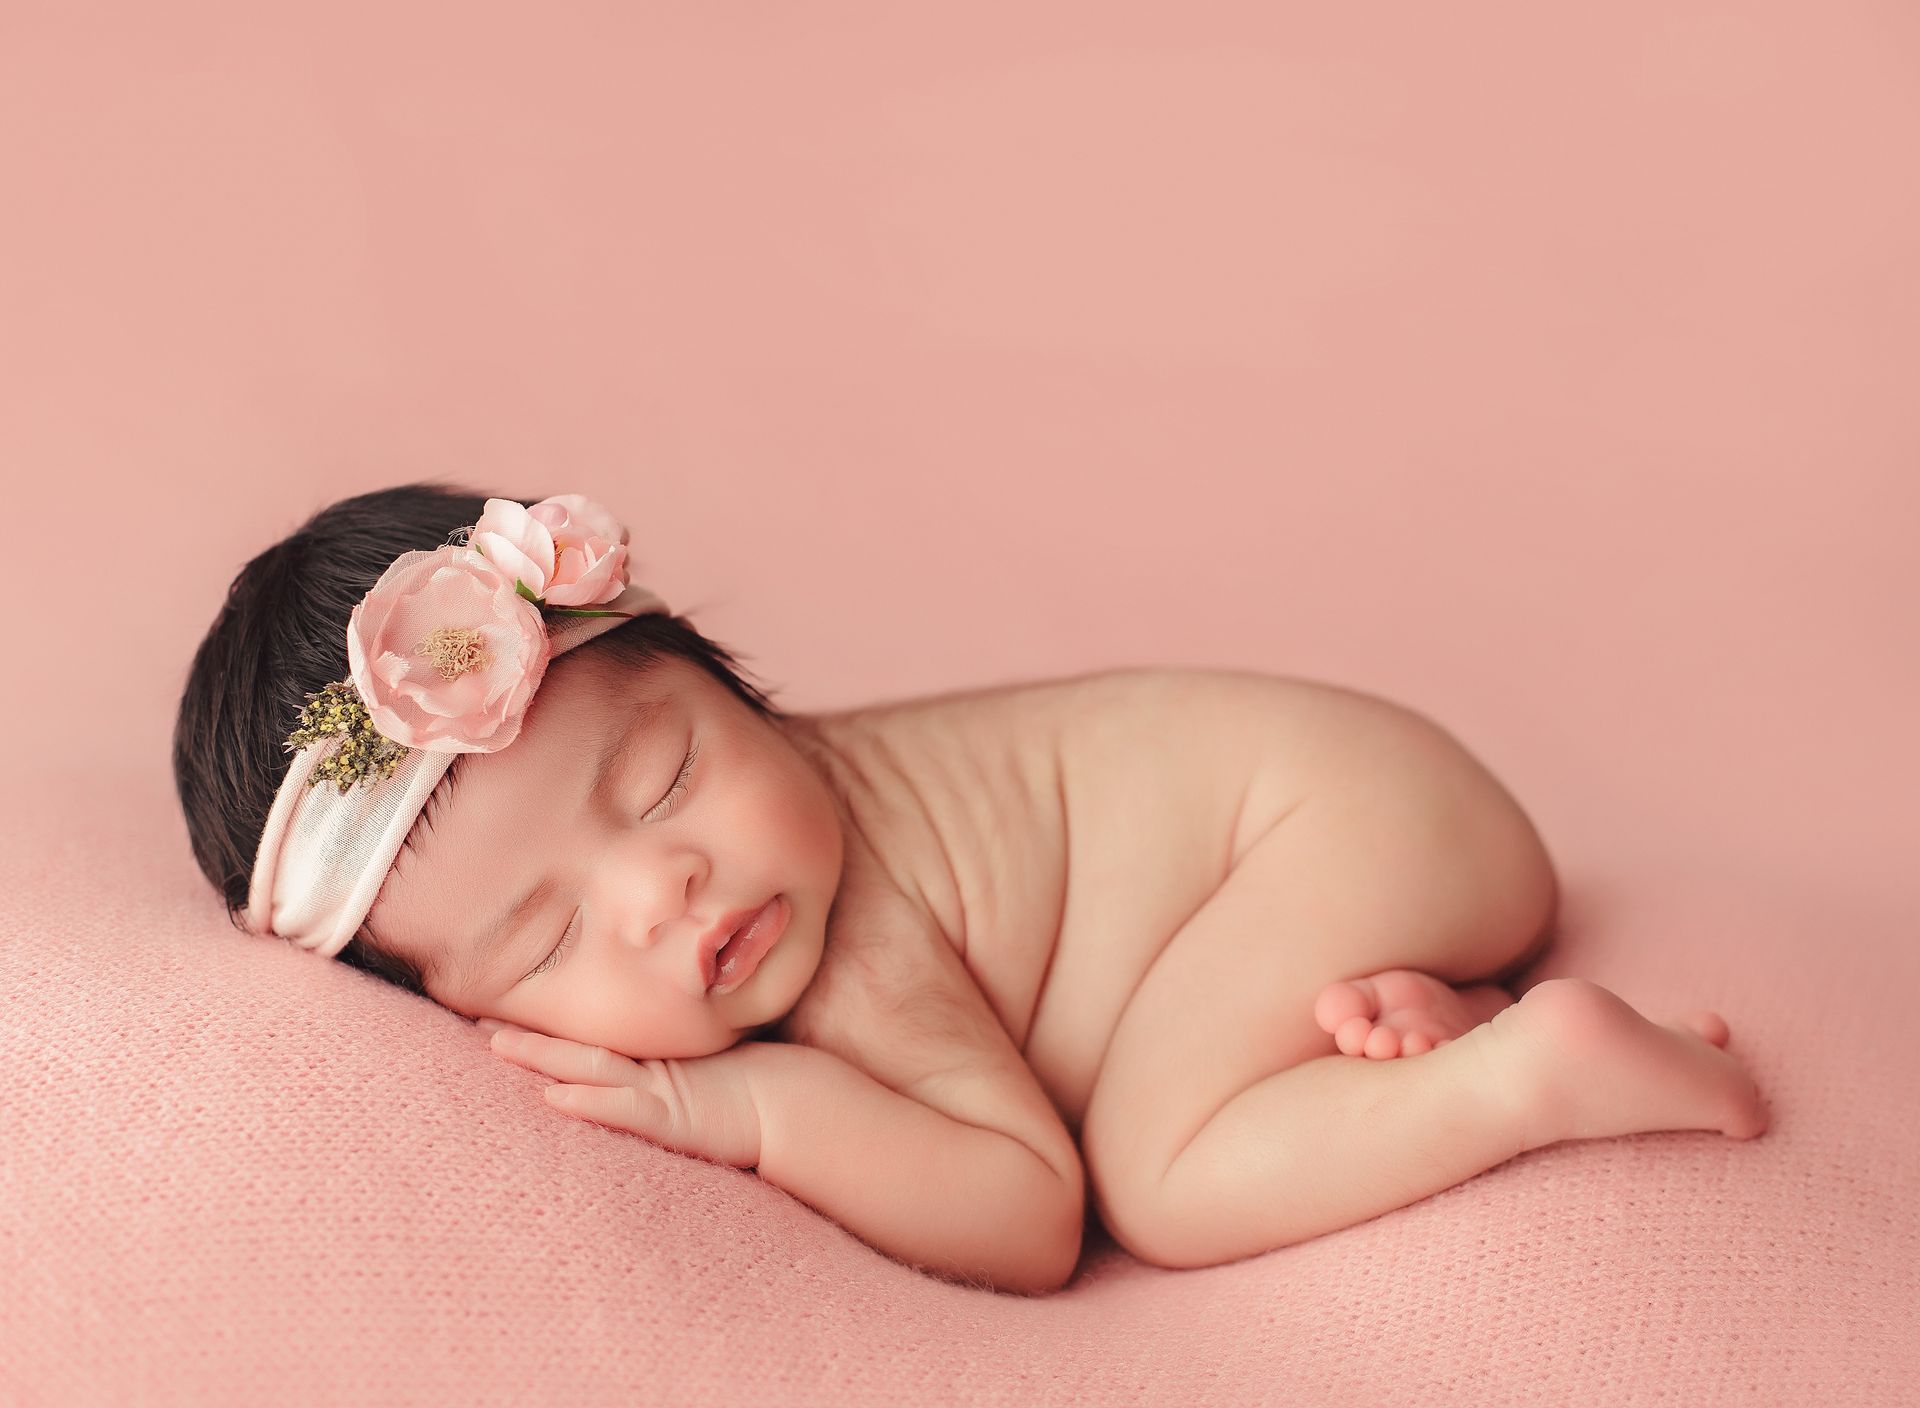 A newborn baby girl wearing a headband is sleeping on a pink blanket.